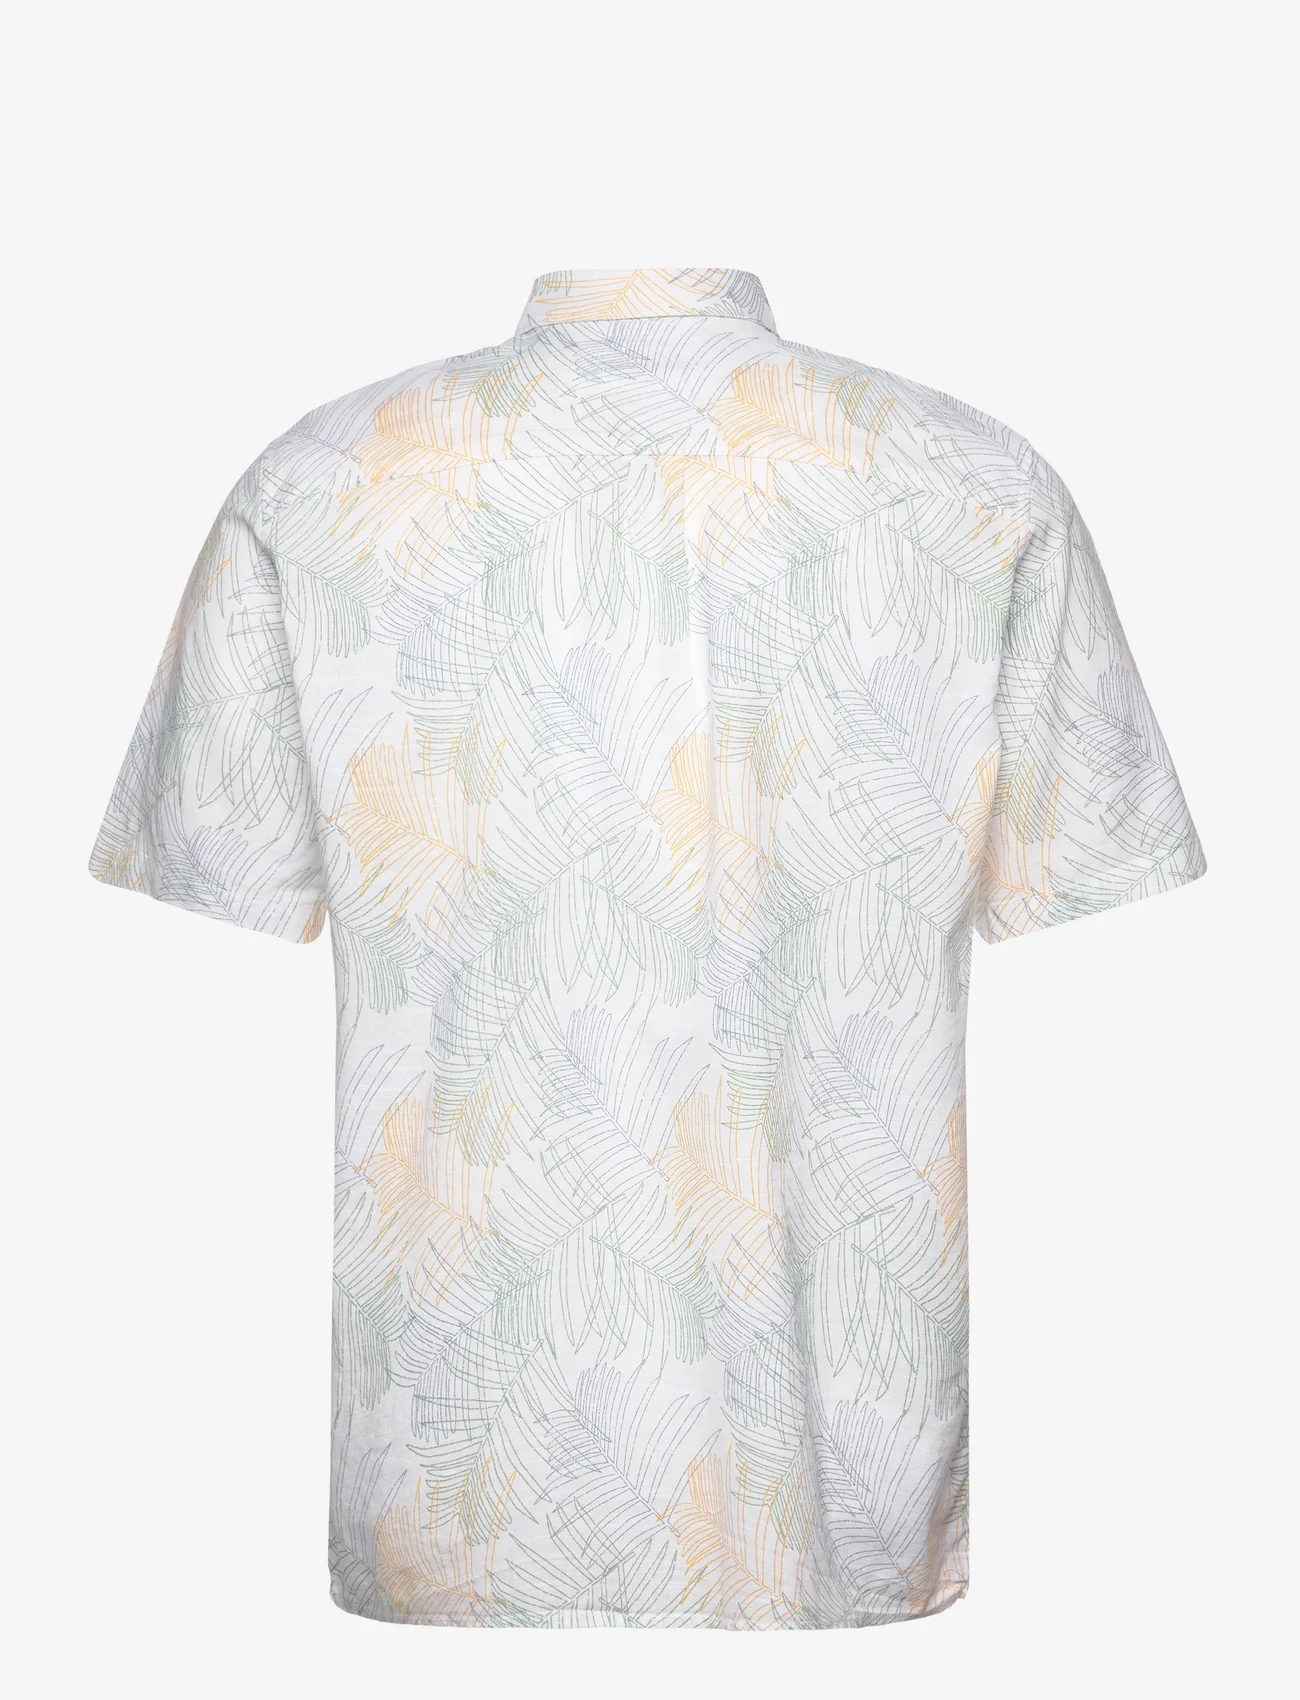 Tom Tailor - comfort printed shirt - die niedrigsten preise - white multicolor leaf design - 1